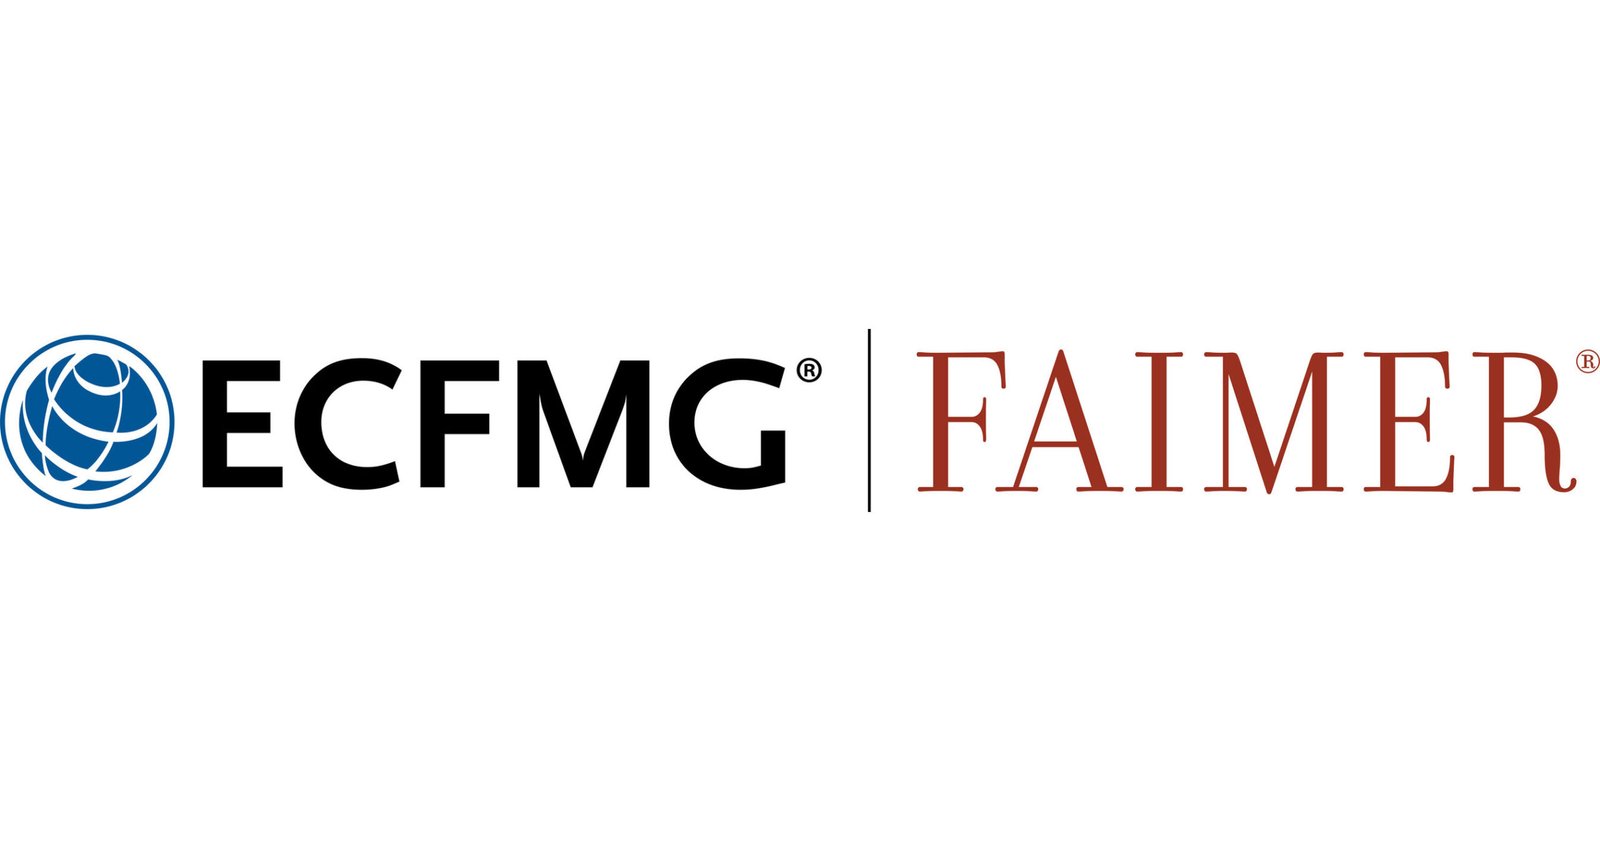 ECFMG_FAIMER_Logo scaled